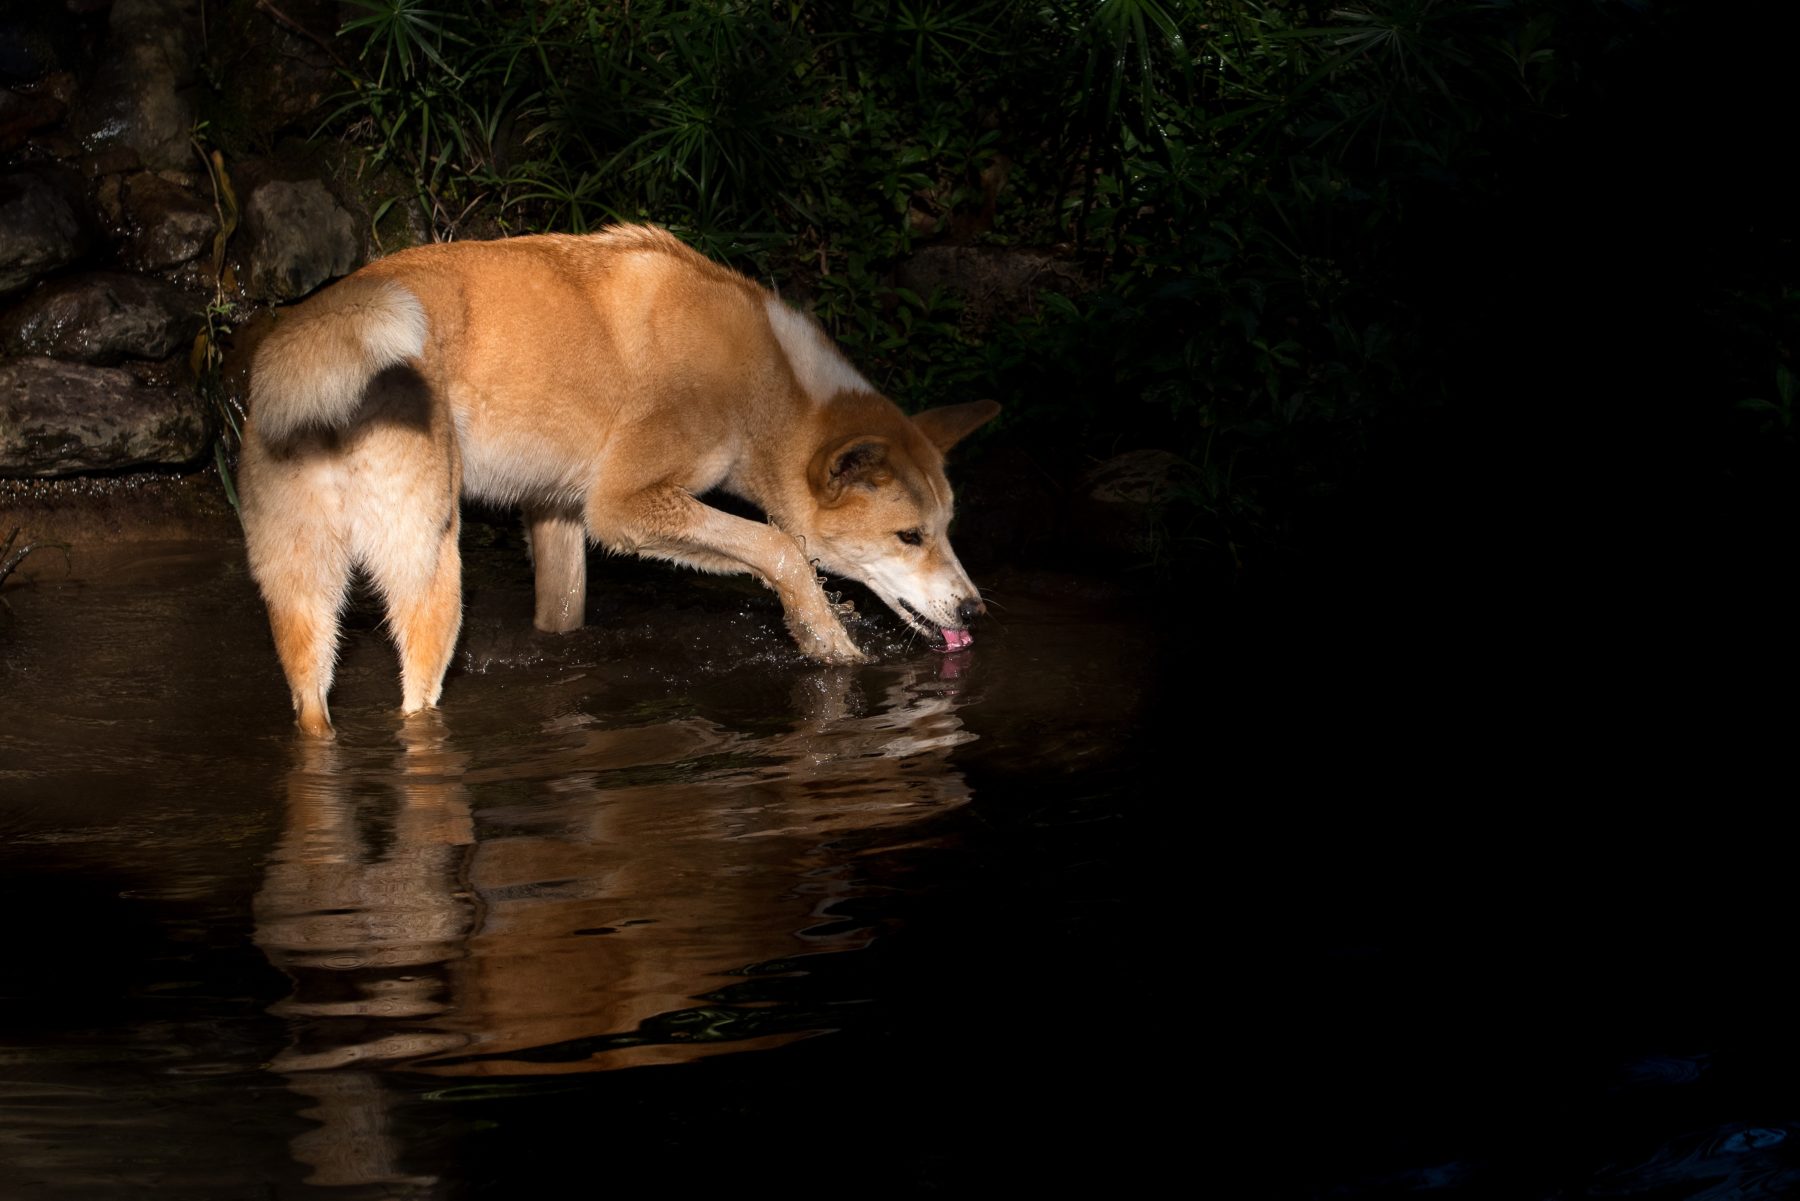 A dingo drinking water from a lake in Kuranda, Australia.